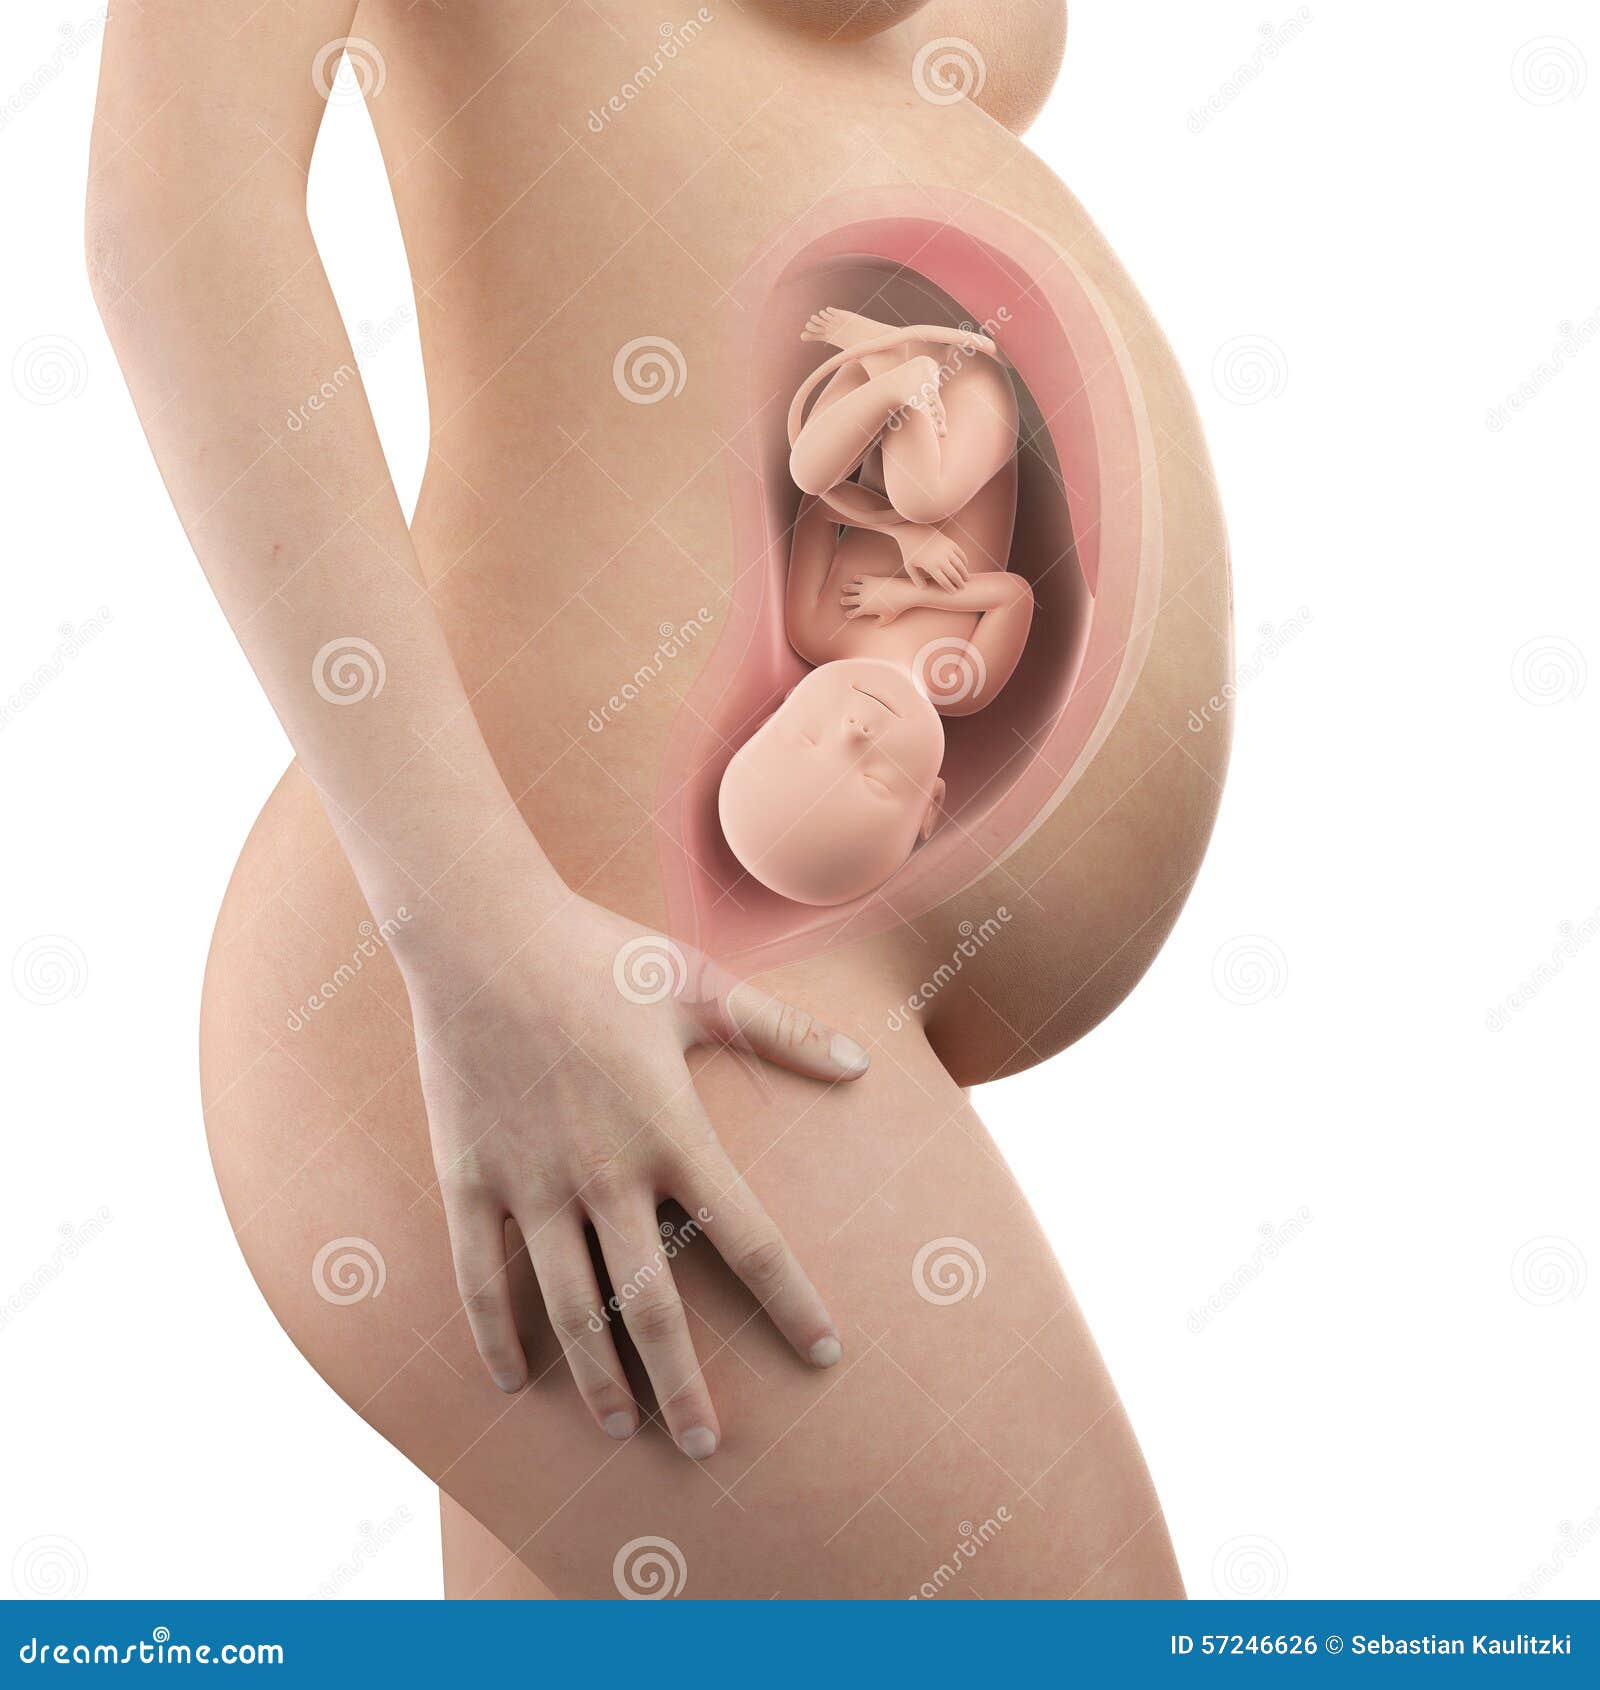 visible uterus and fetus week 40